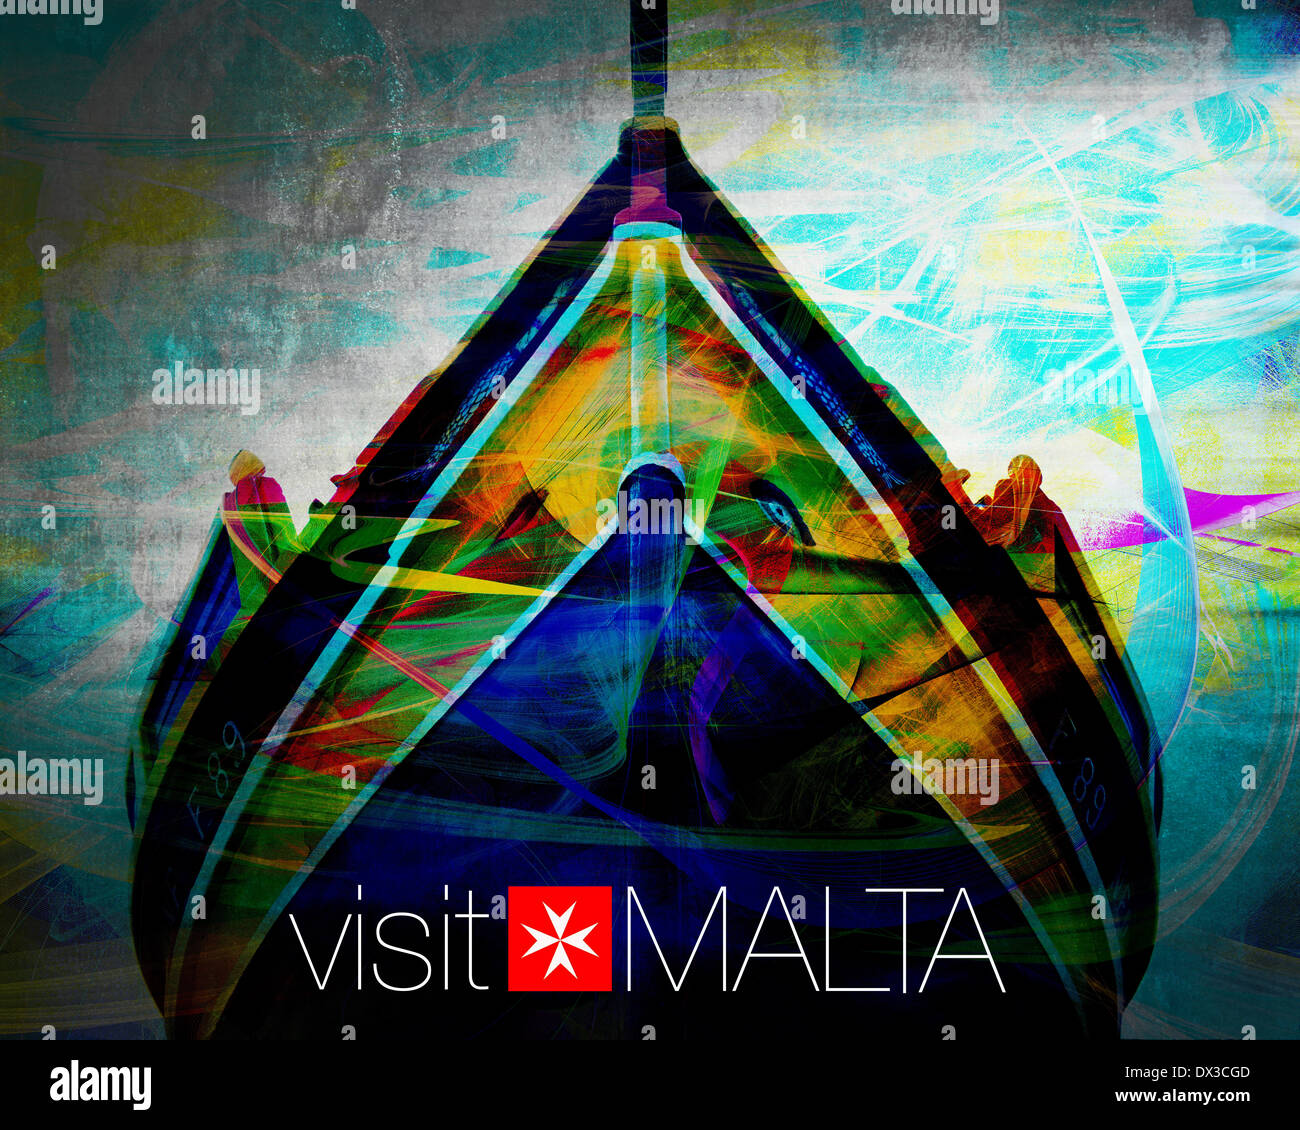 MT - MALTA: Besuch Malta Konzept Stockfoto